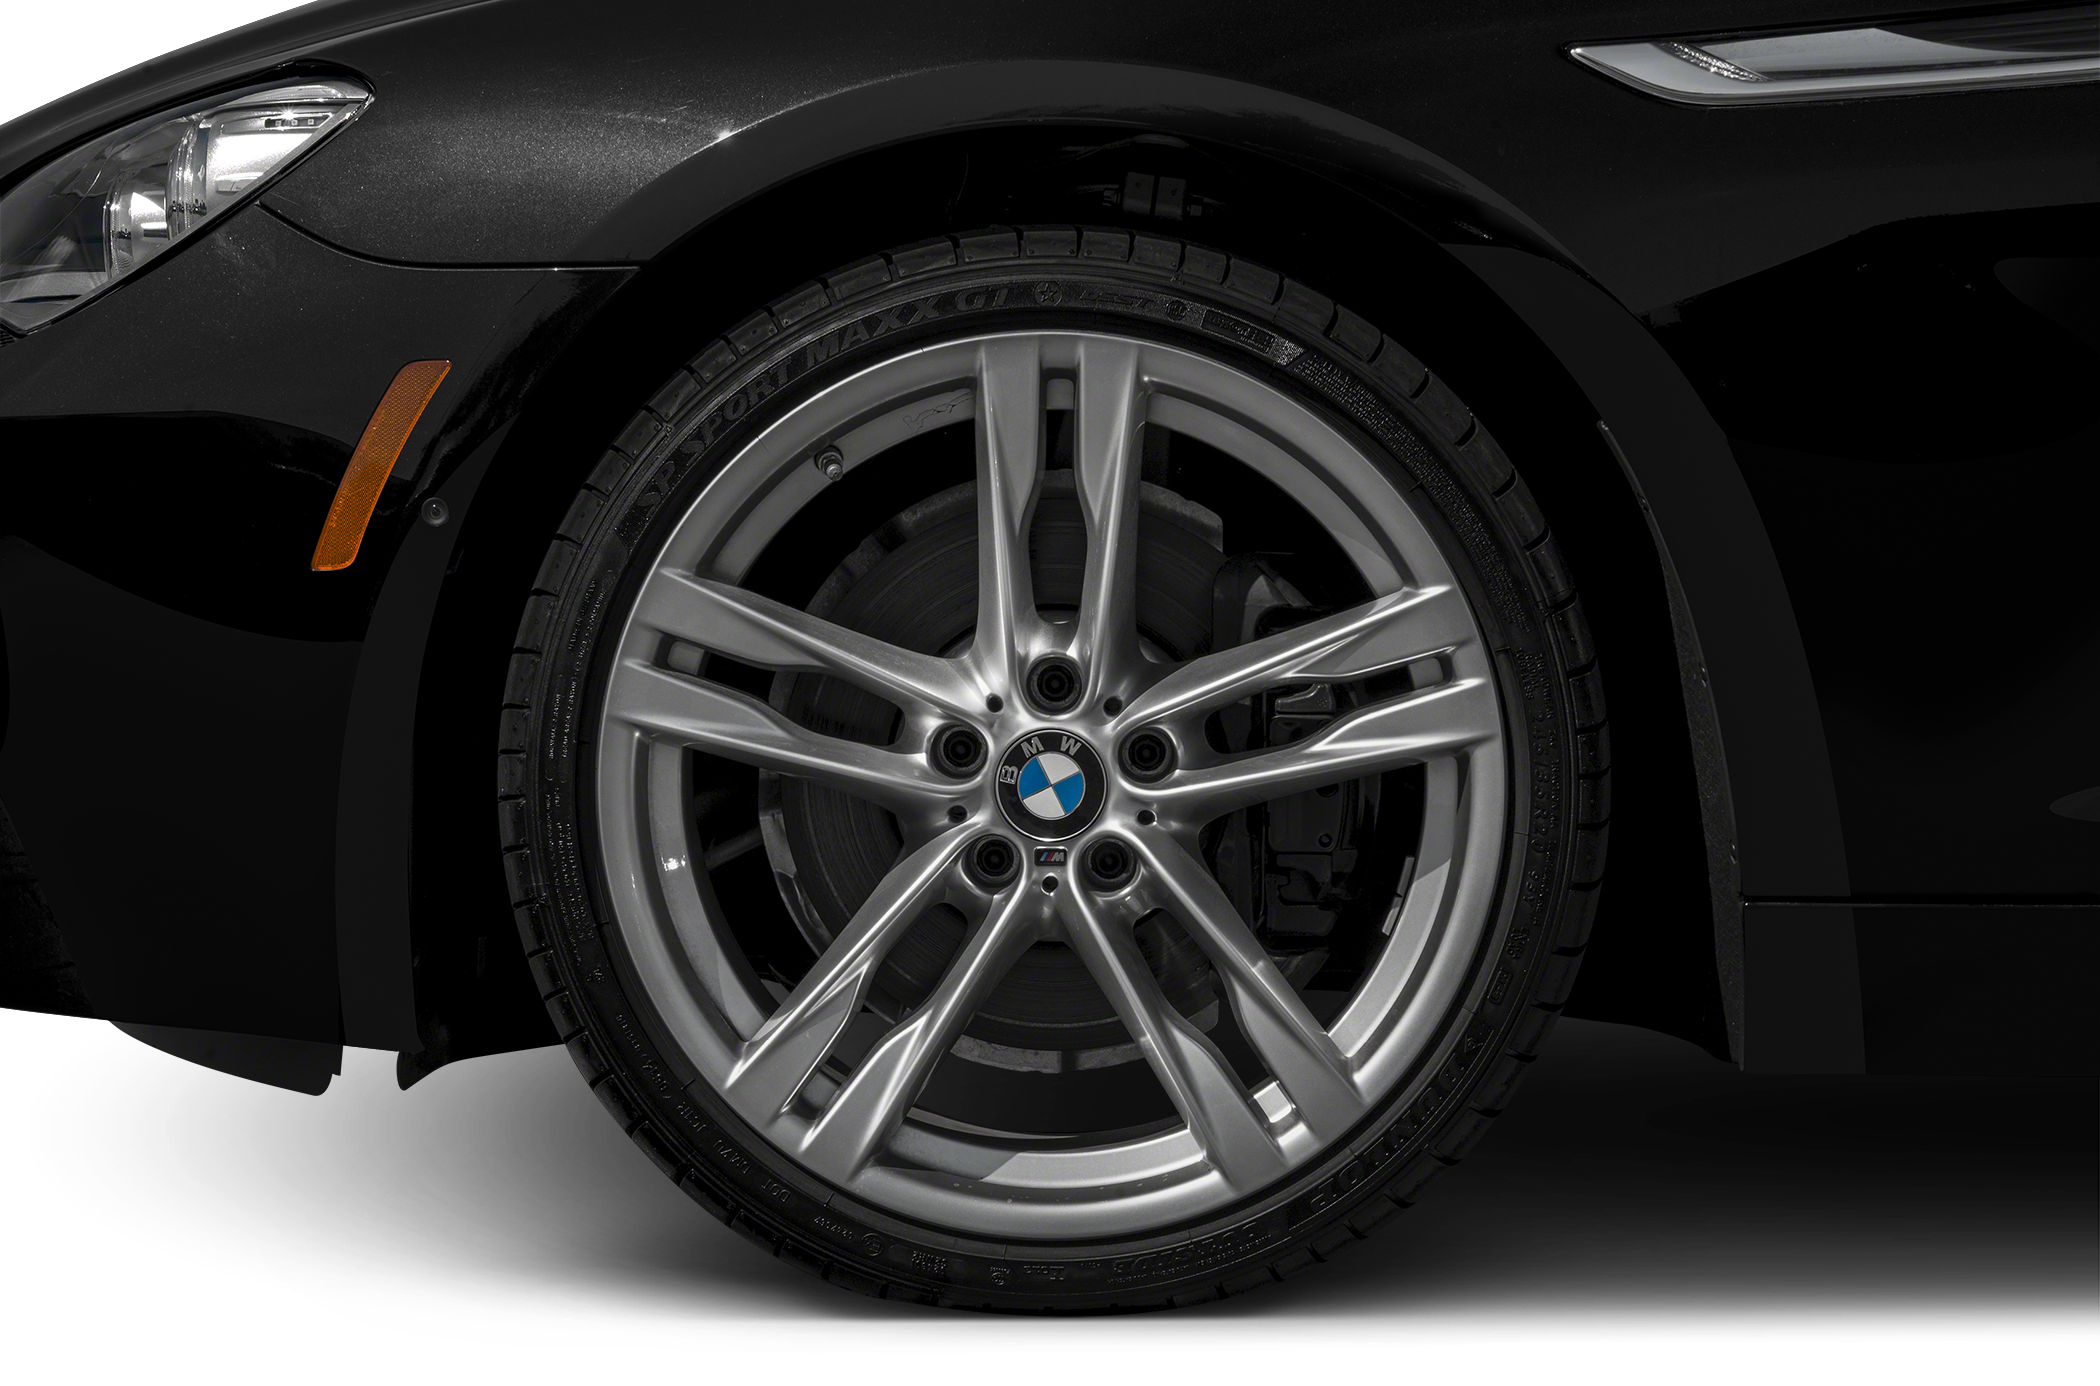 2015 BMW 640